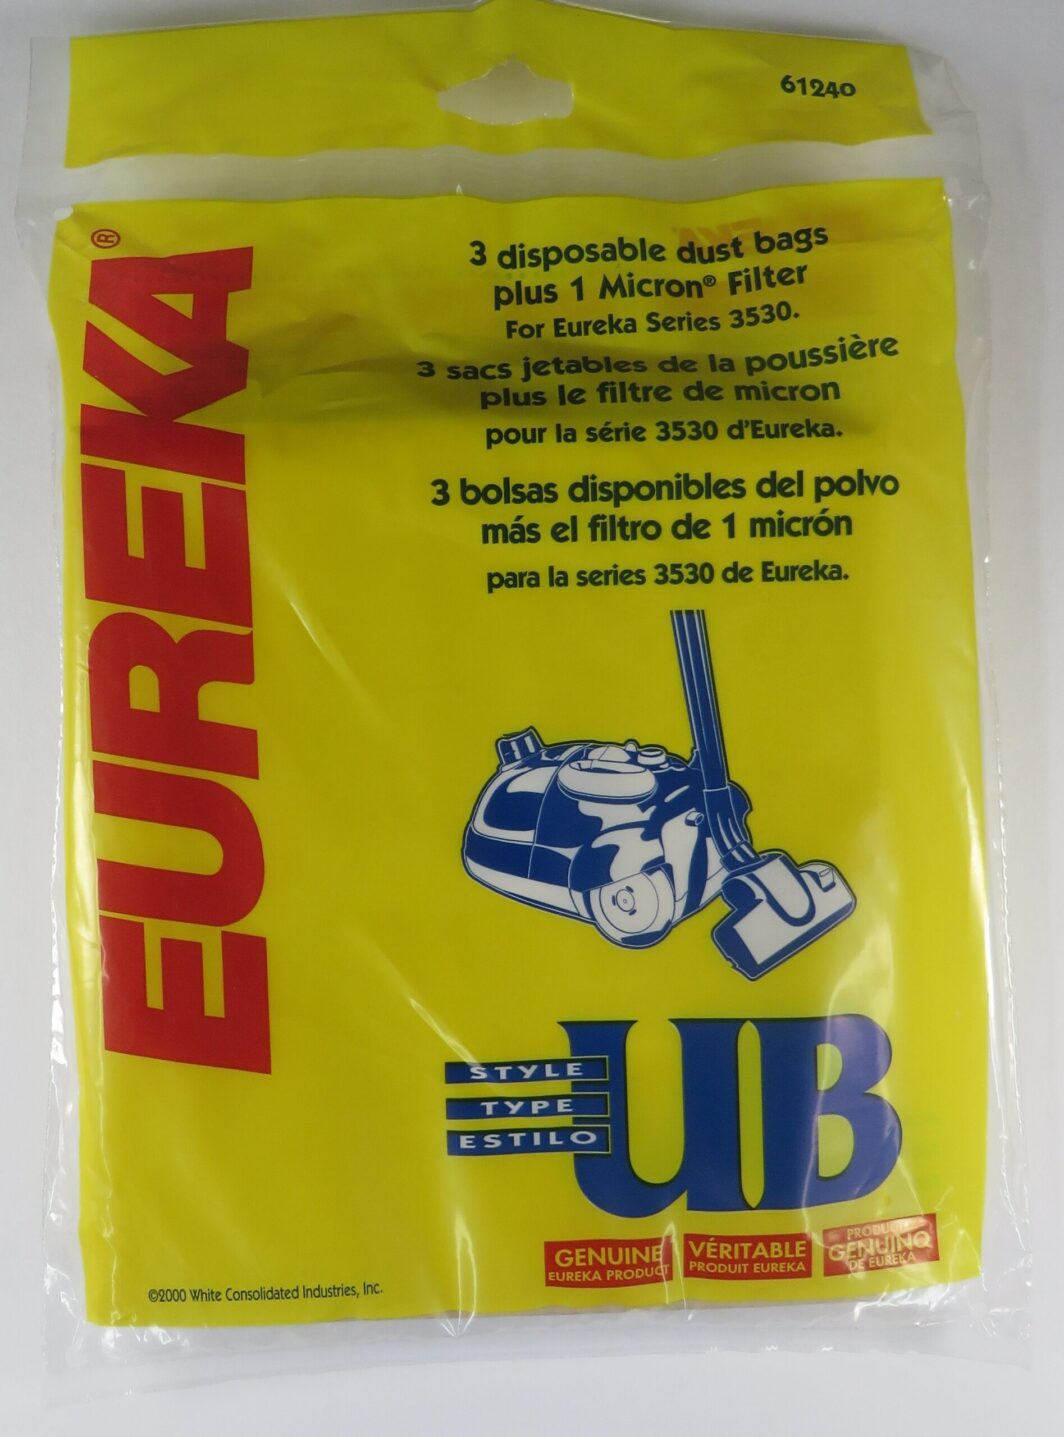 Eureka UB Bags - 3 Pack #61240